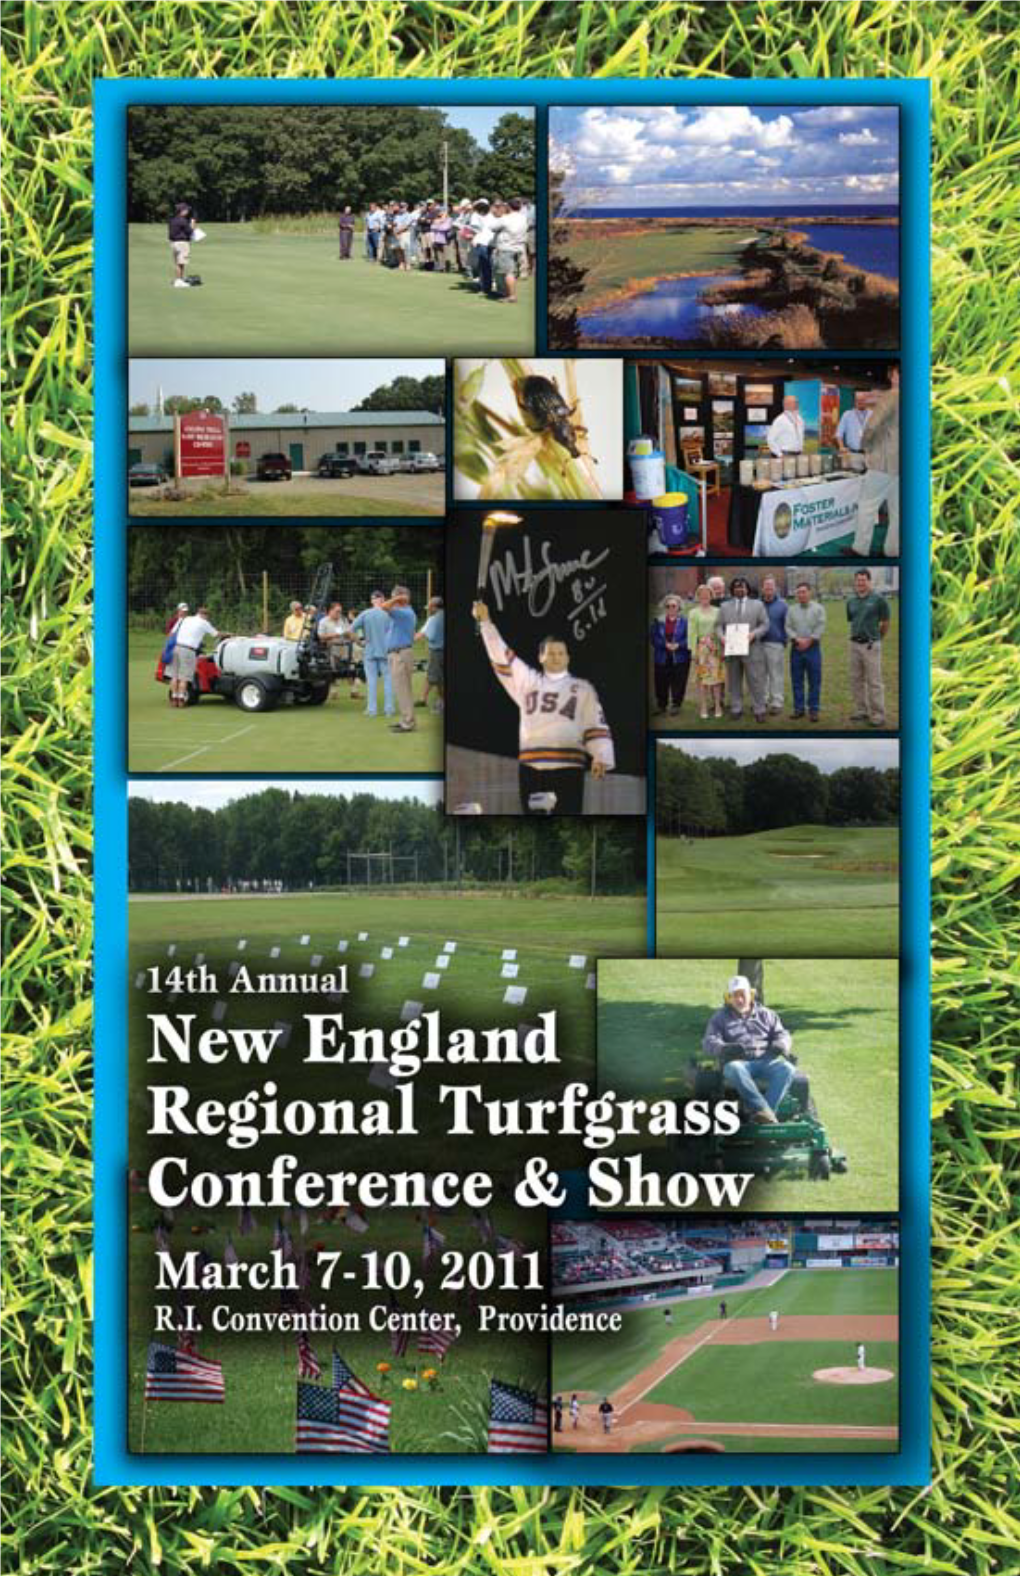 New England Regional Turfgrass Foundation Board